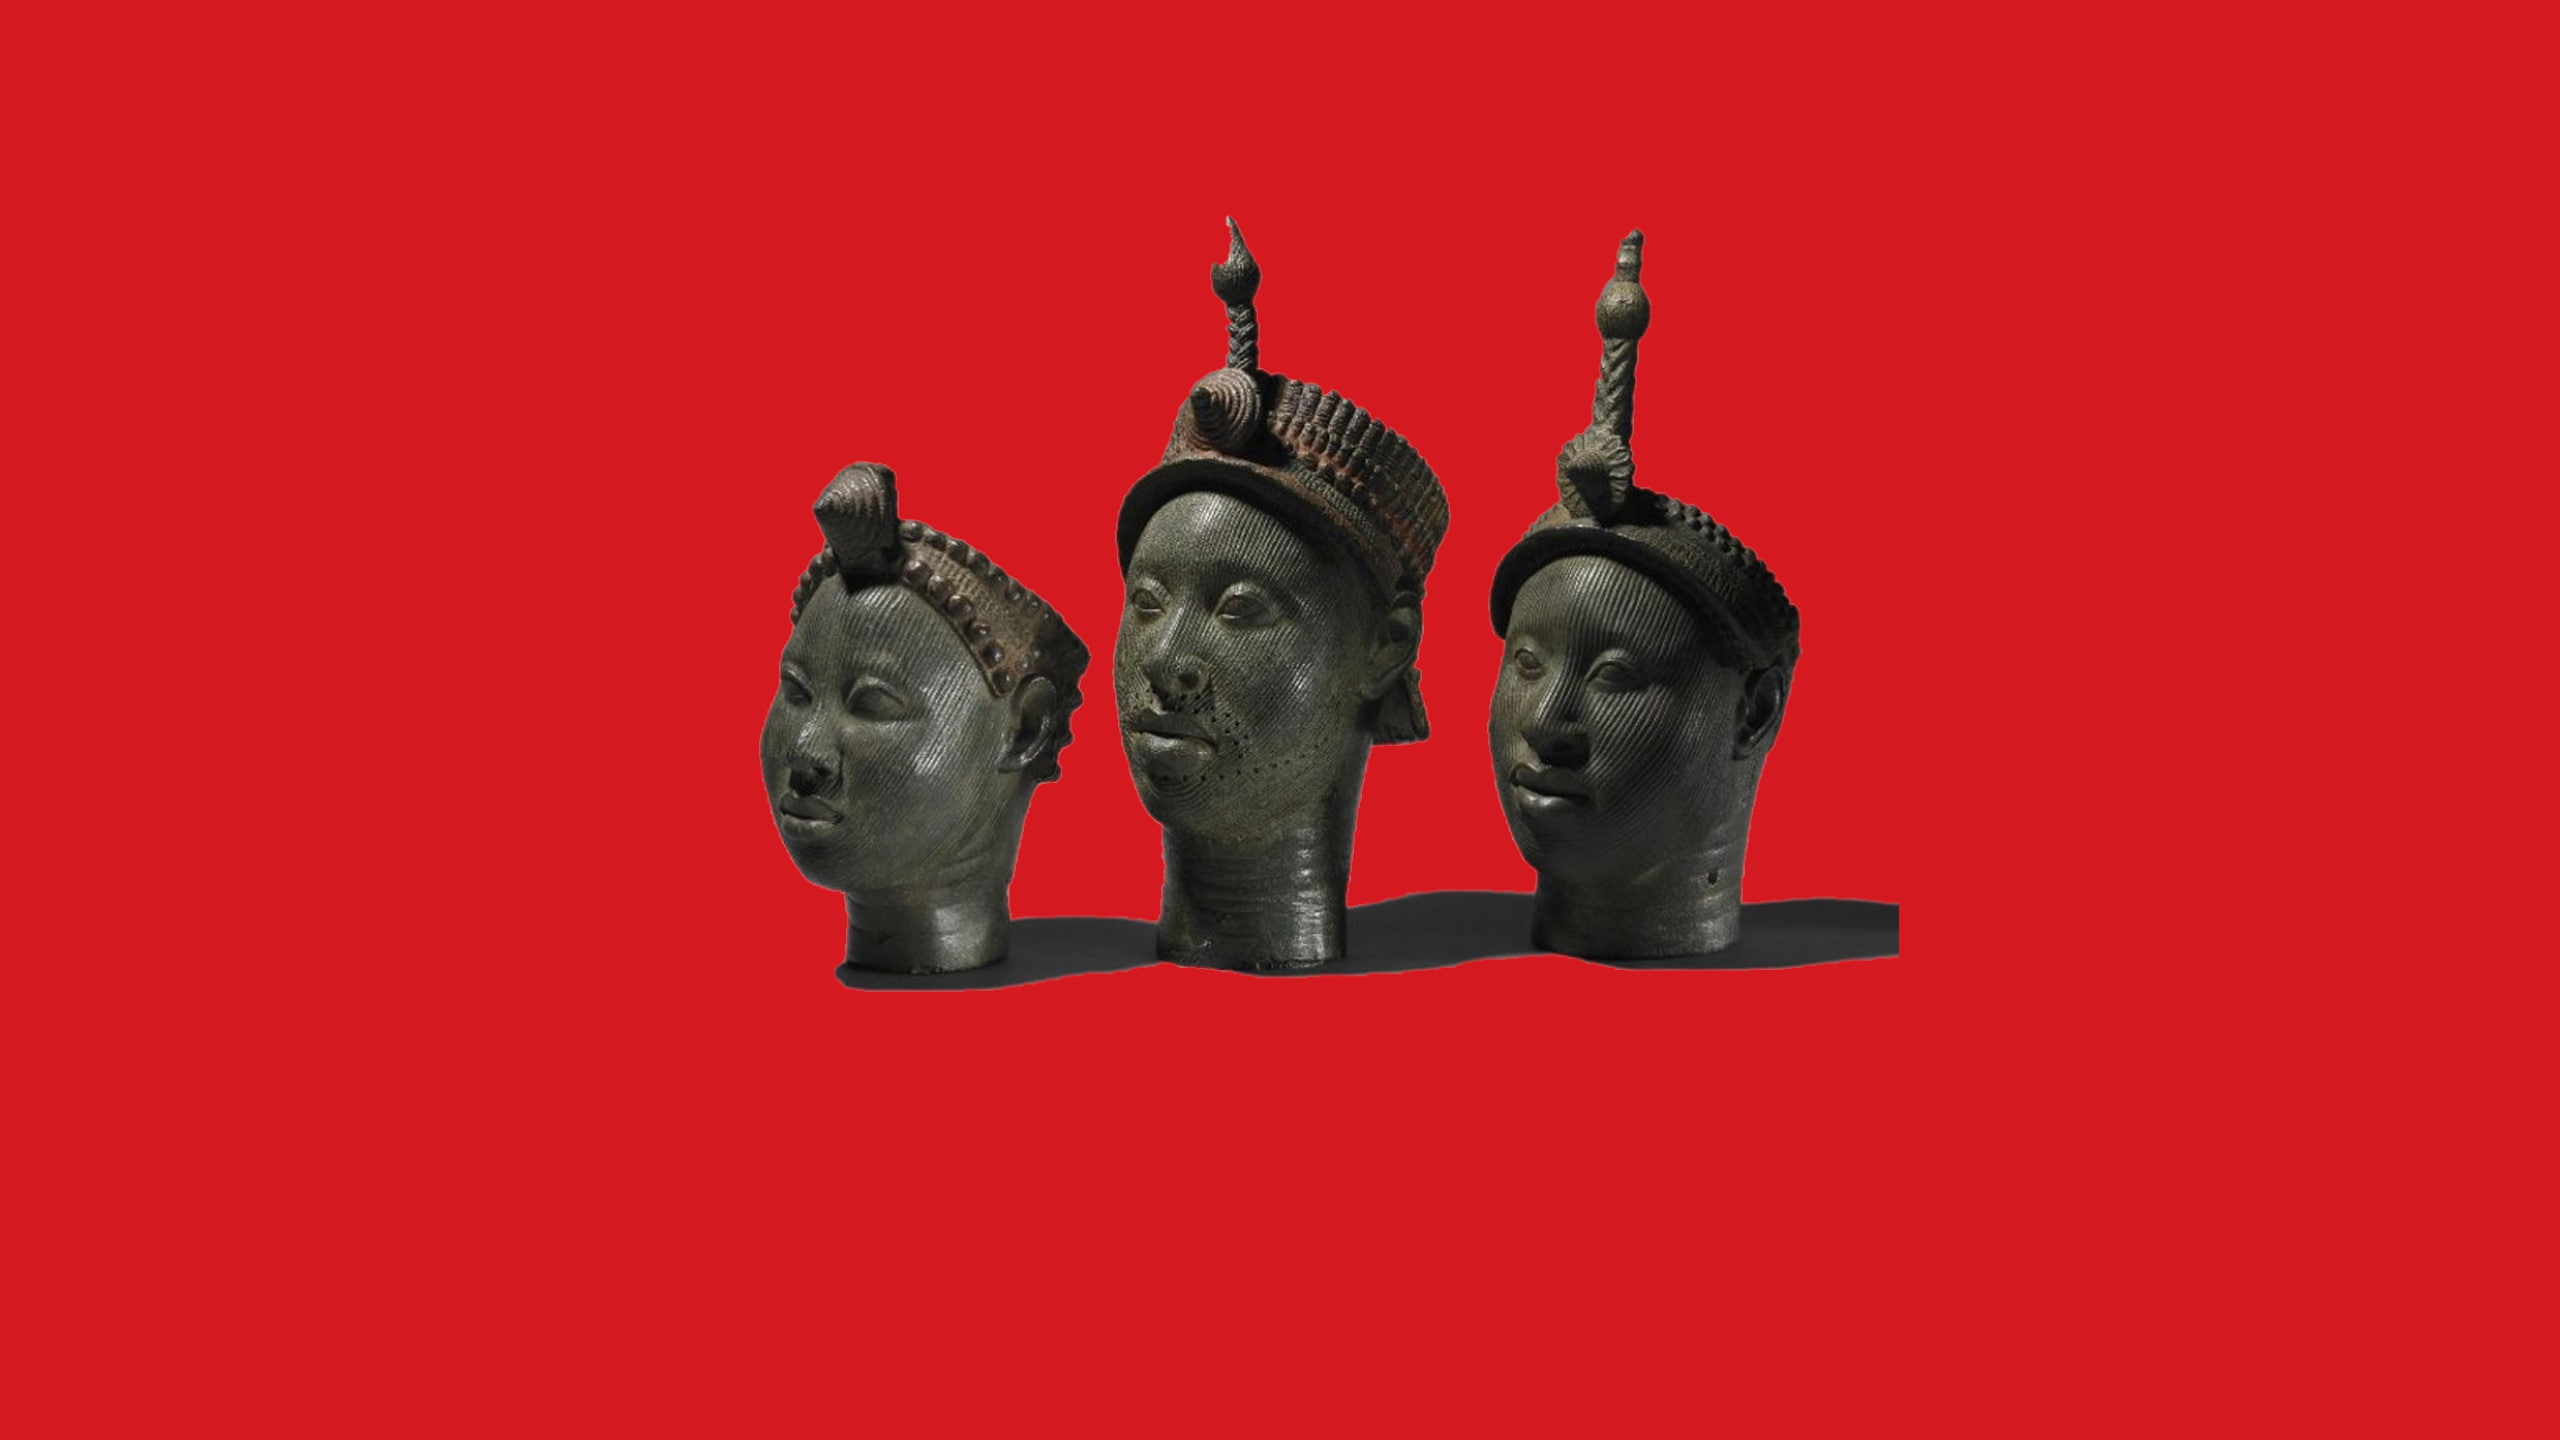 Yoruba, minimalism, Windows 10, Nigeria, art and craft, red